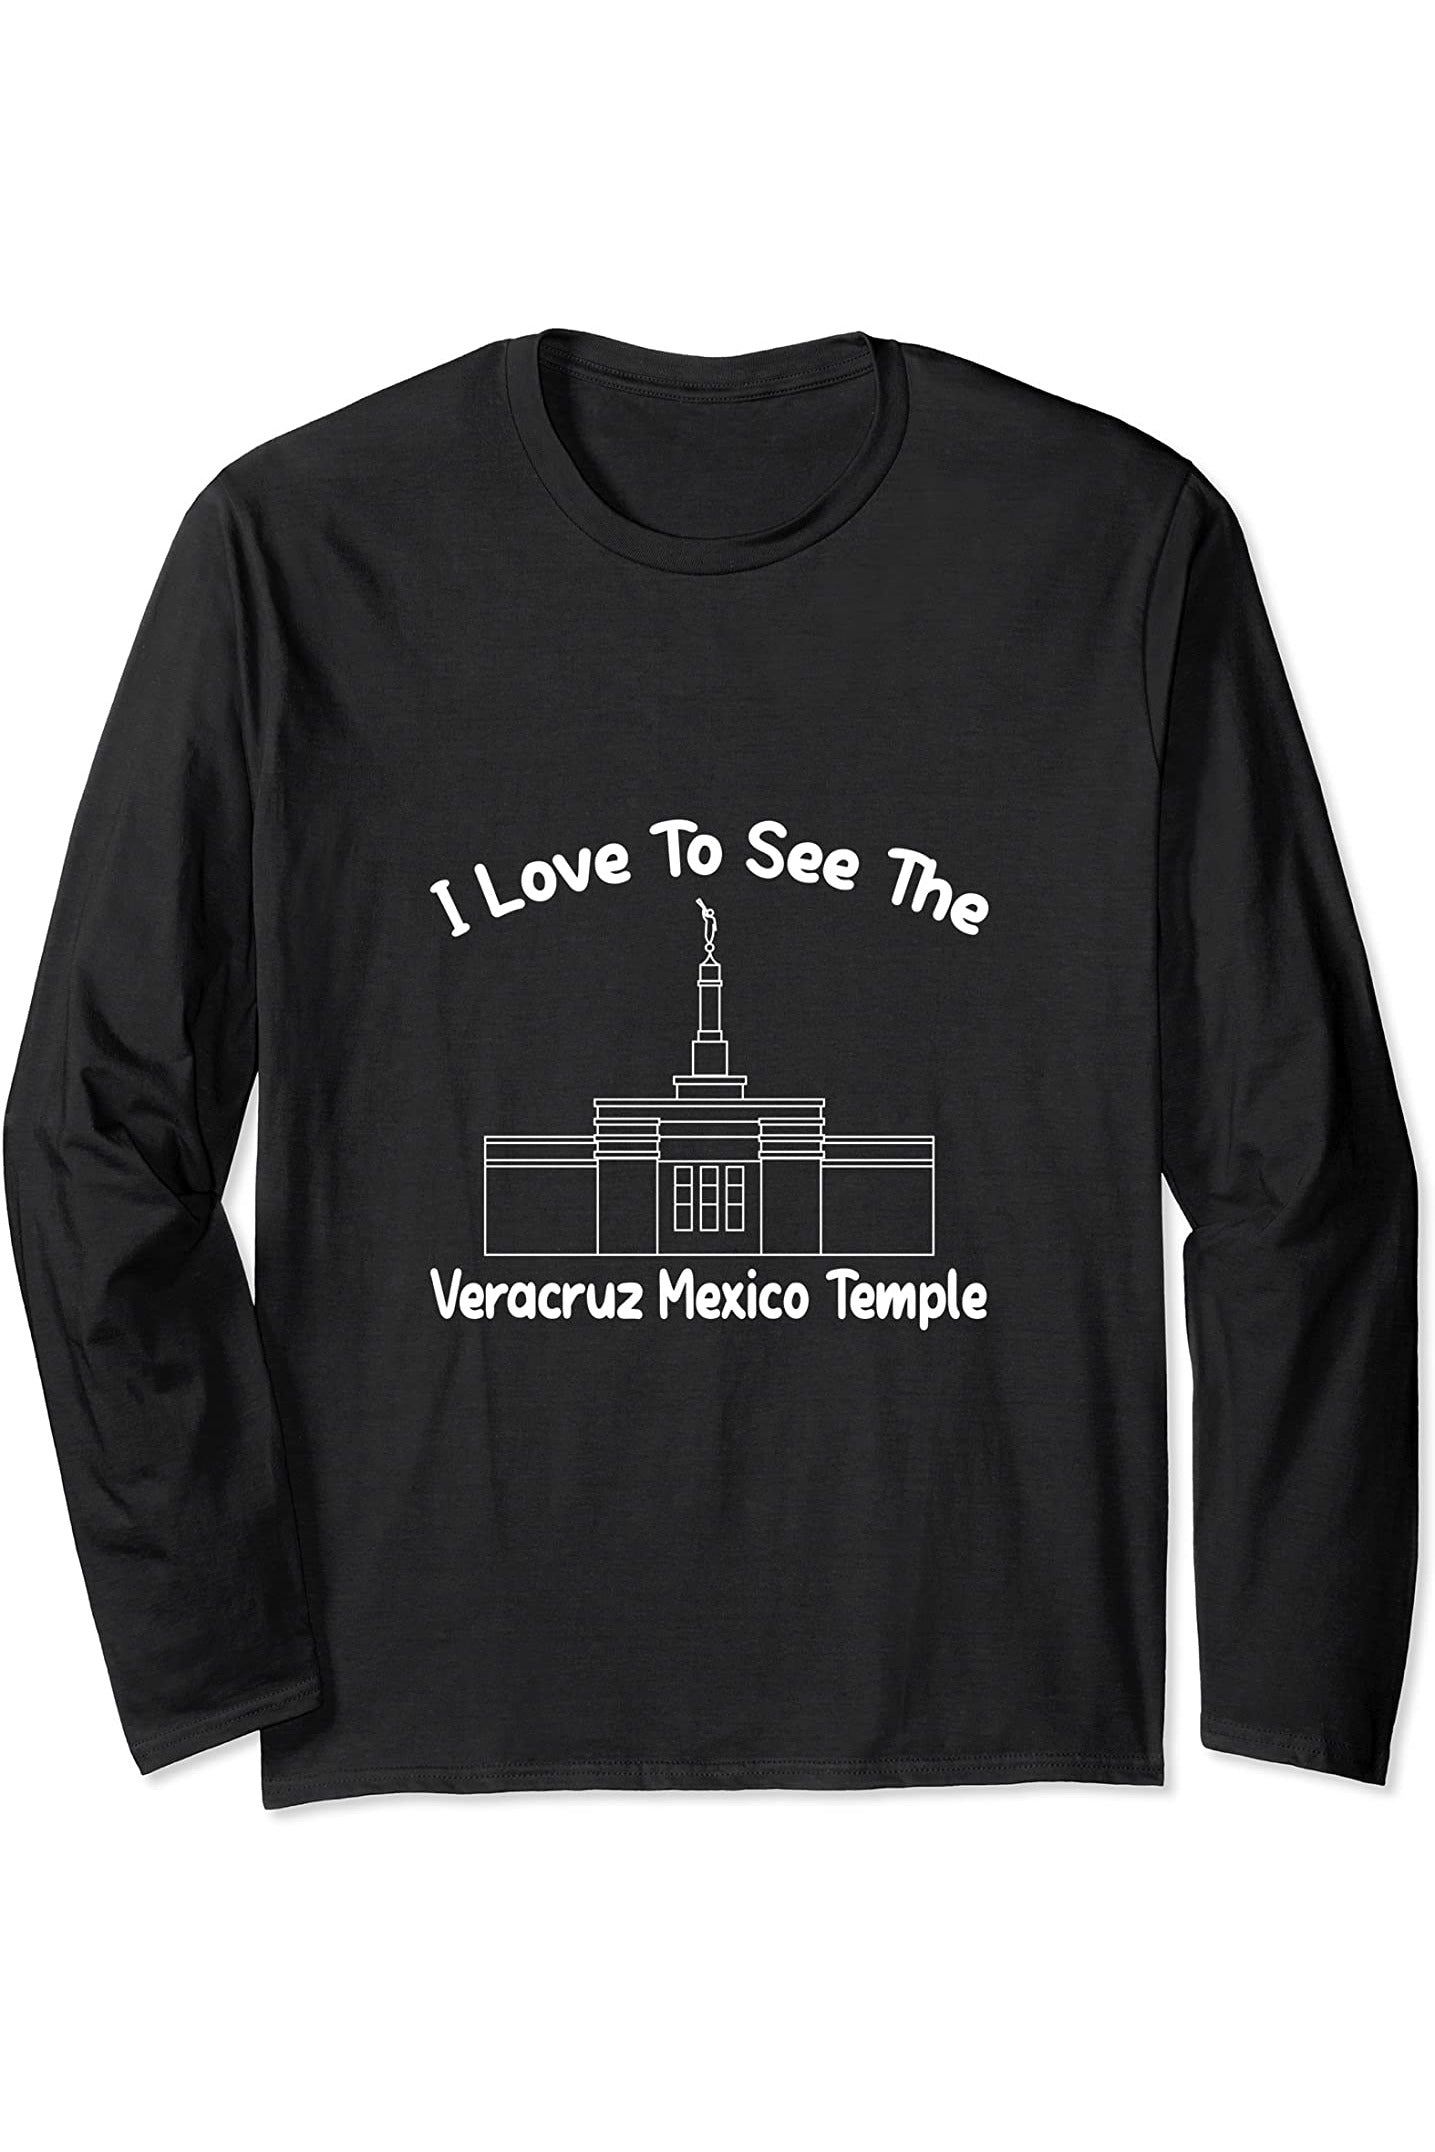 Veracruz Mexico Temple Long Sleeve T-Shirt - Primary Style (English) US